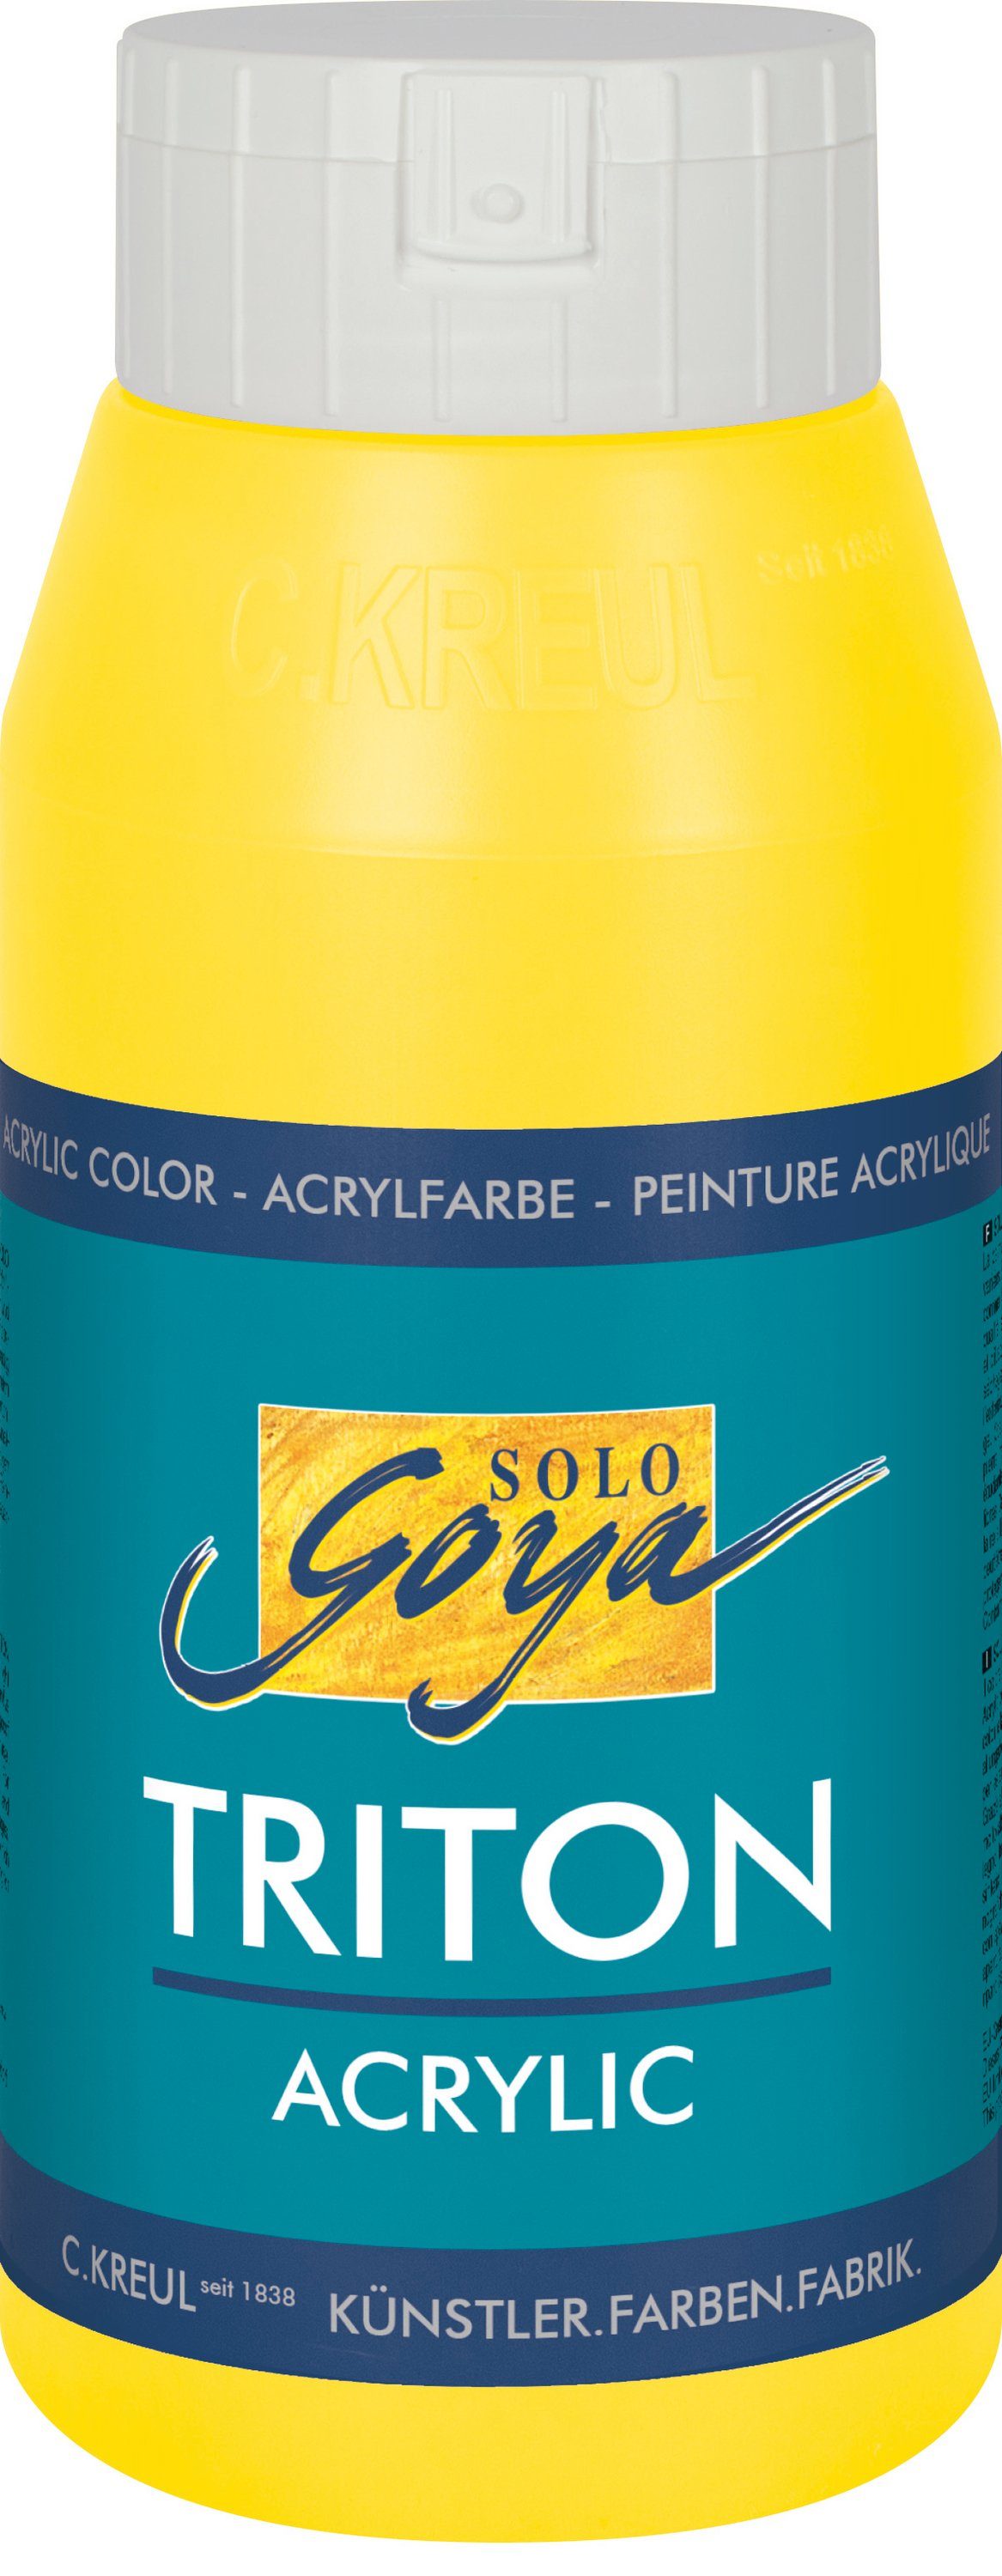 Kreul Acrylfarbe Solo Goya Triton Acrylic, 750 ml Echtgelb-Hell